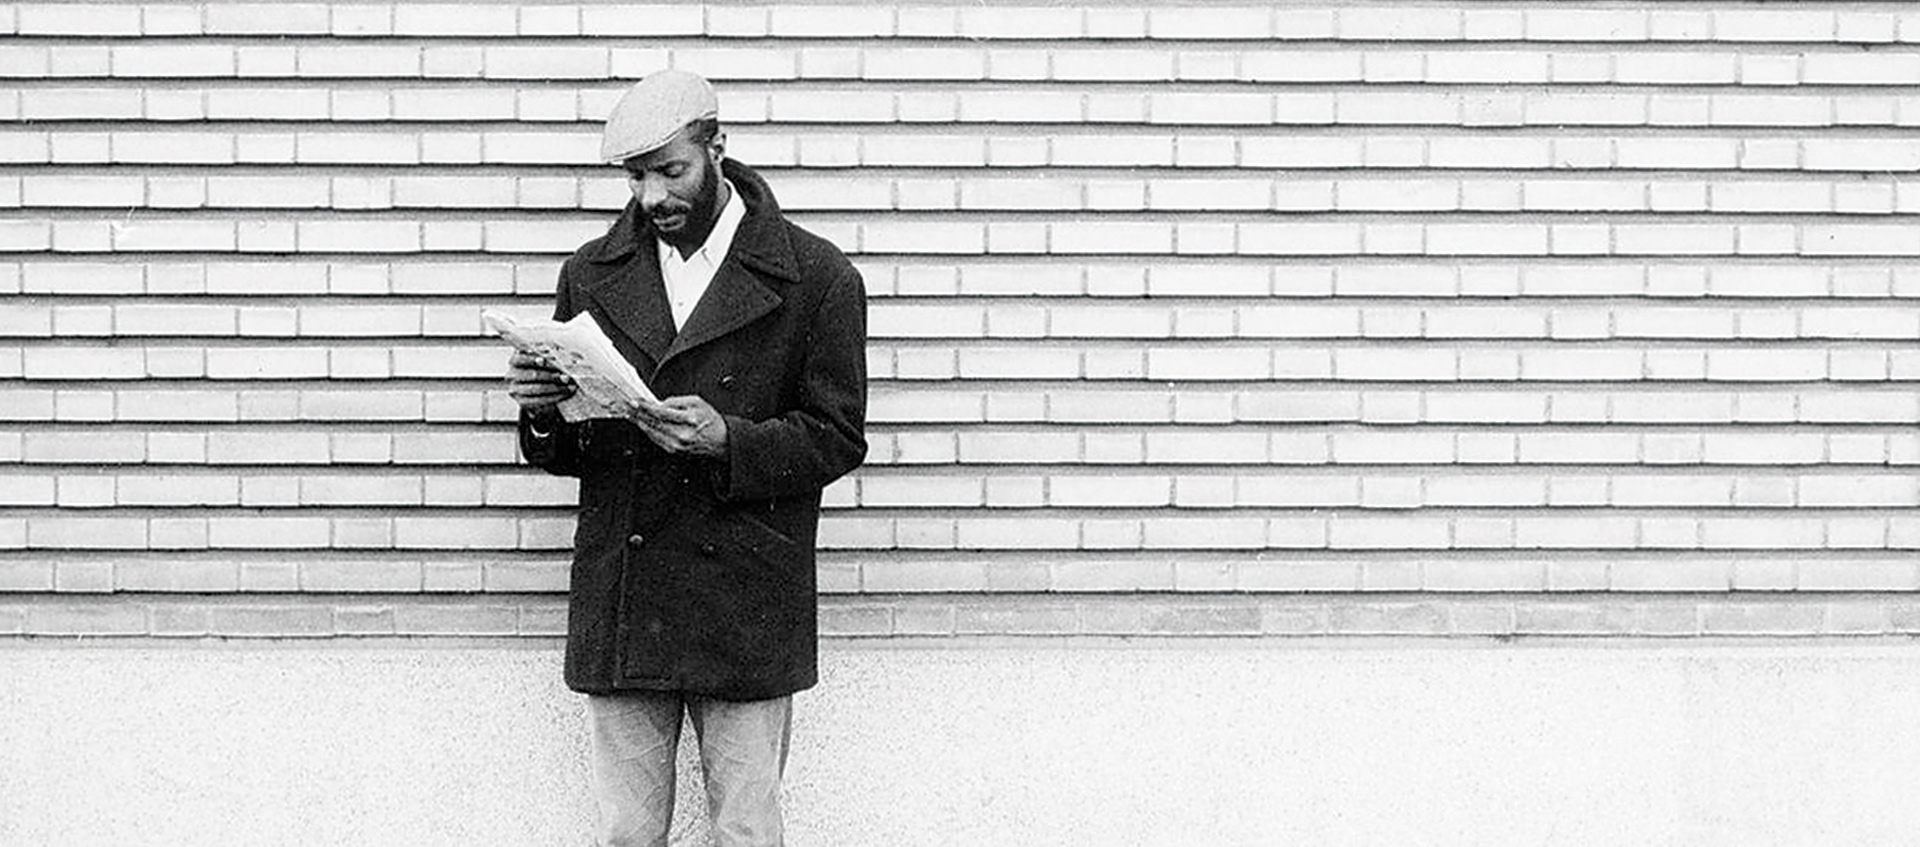 Man reading newspaper against wall; Soleil Ô